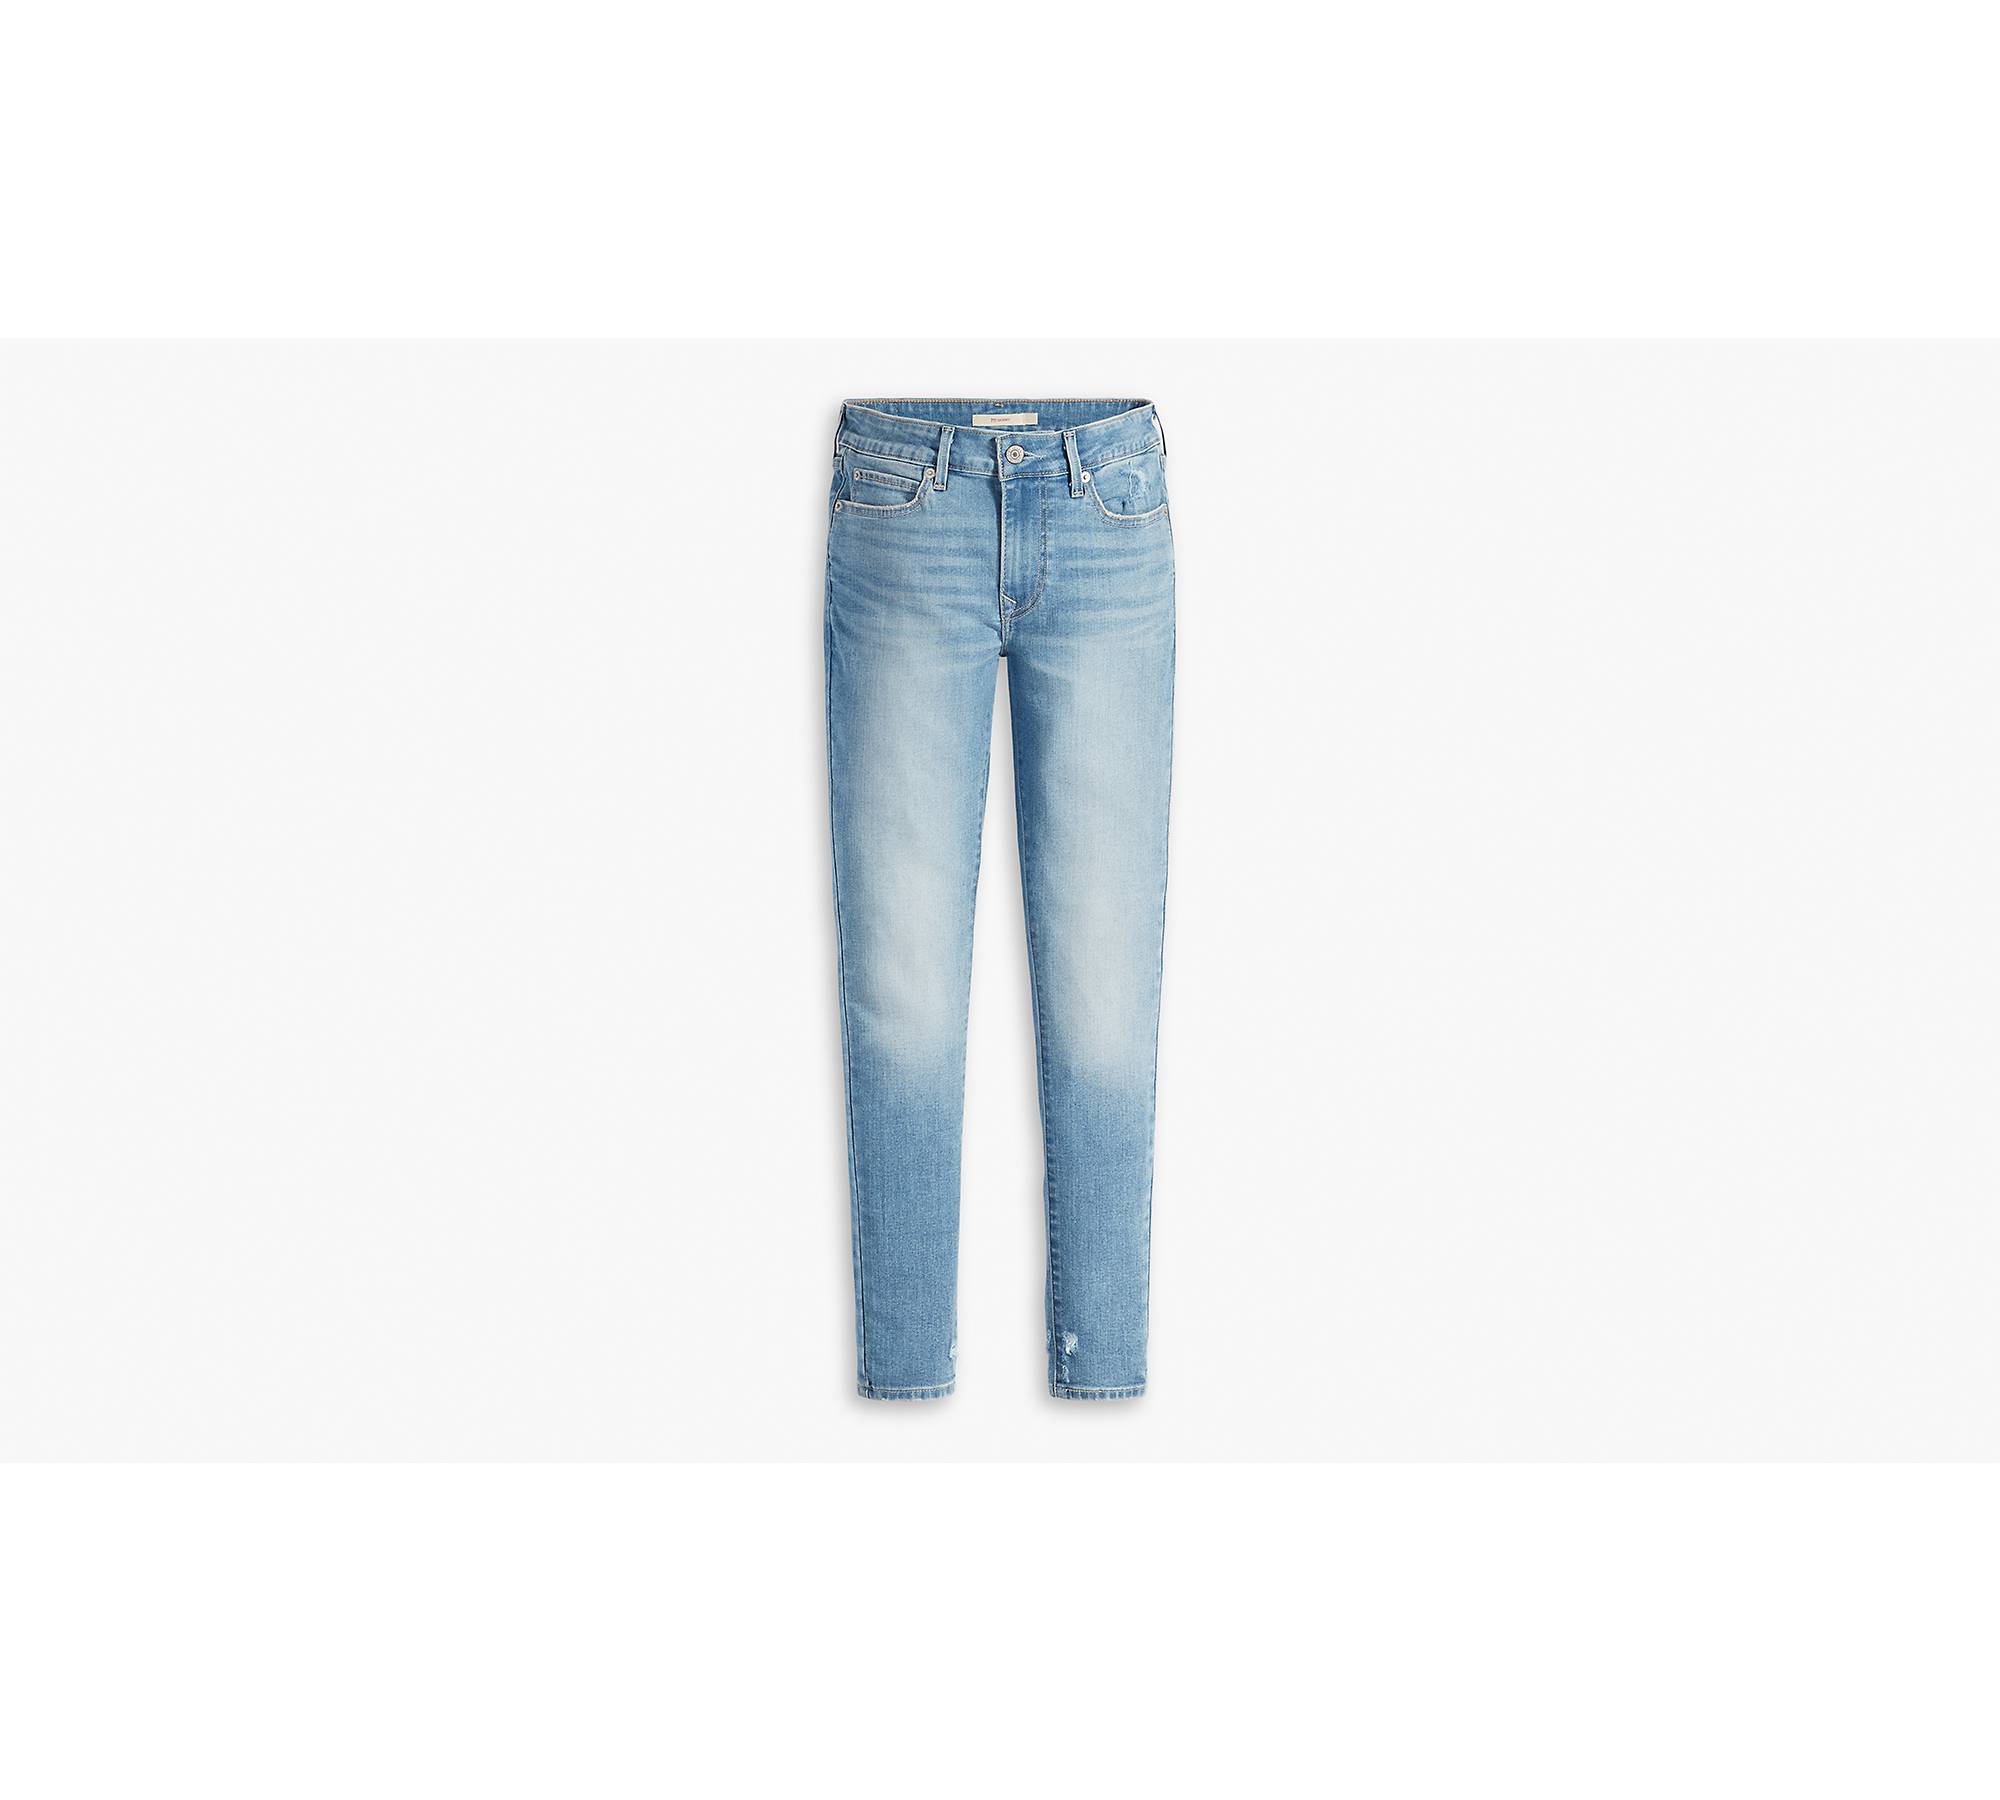 711 Skinny Women's Jeans - Medium Wash